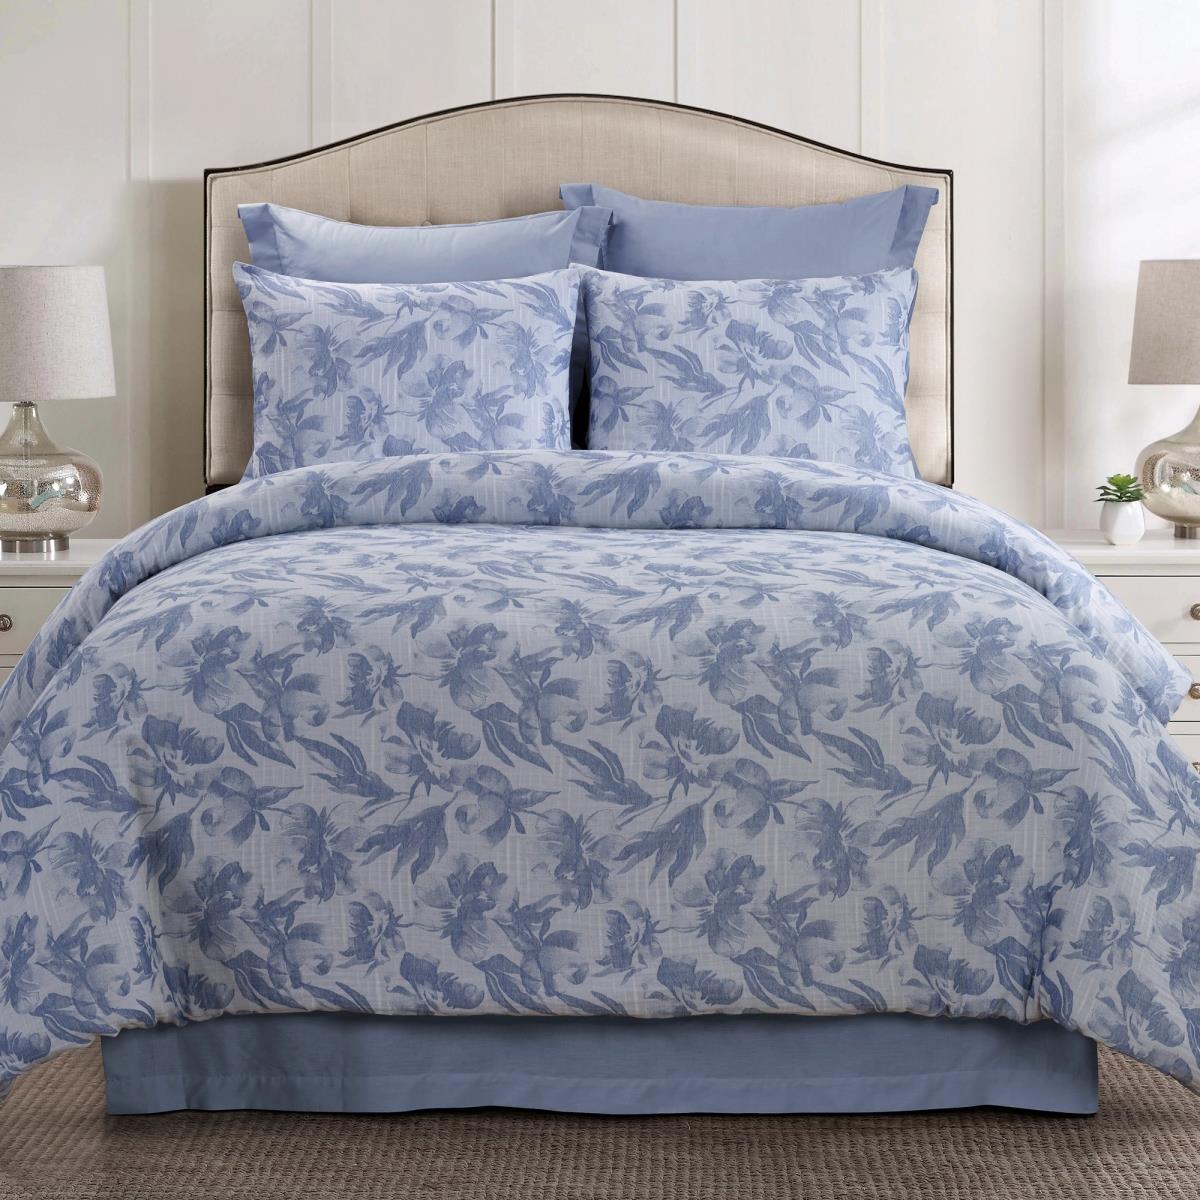 Y00431 King Size Comforter Set - Almaria Soft Blue